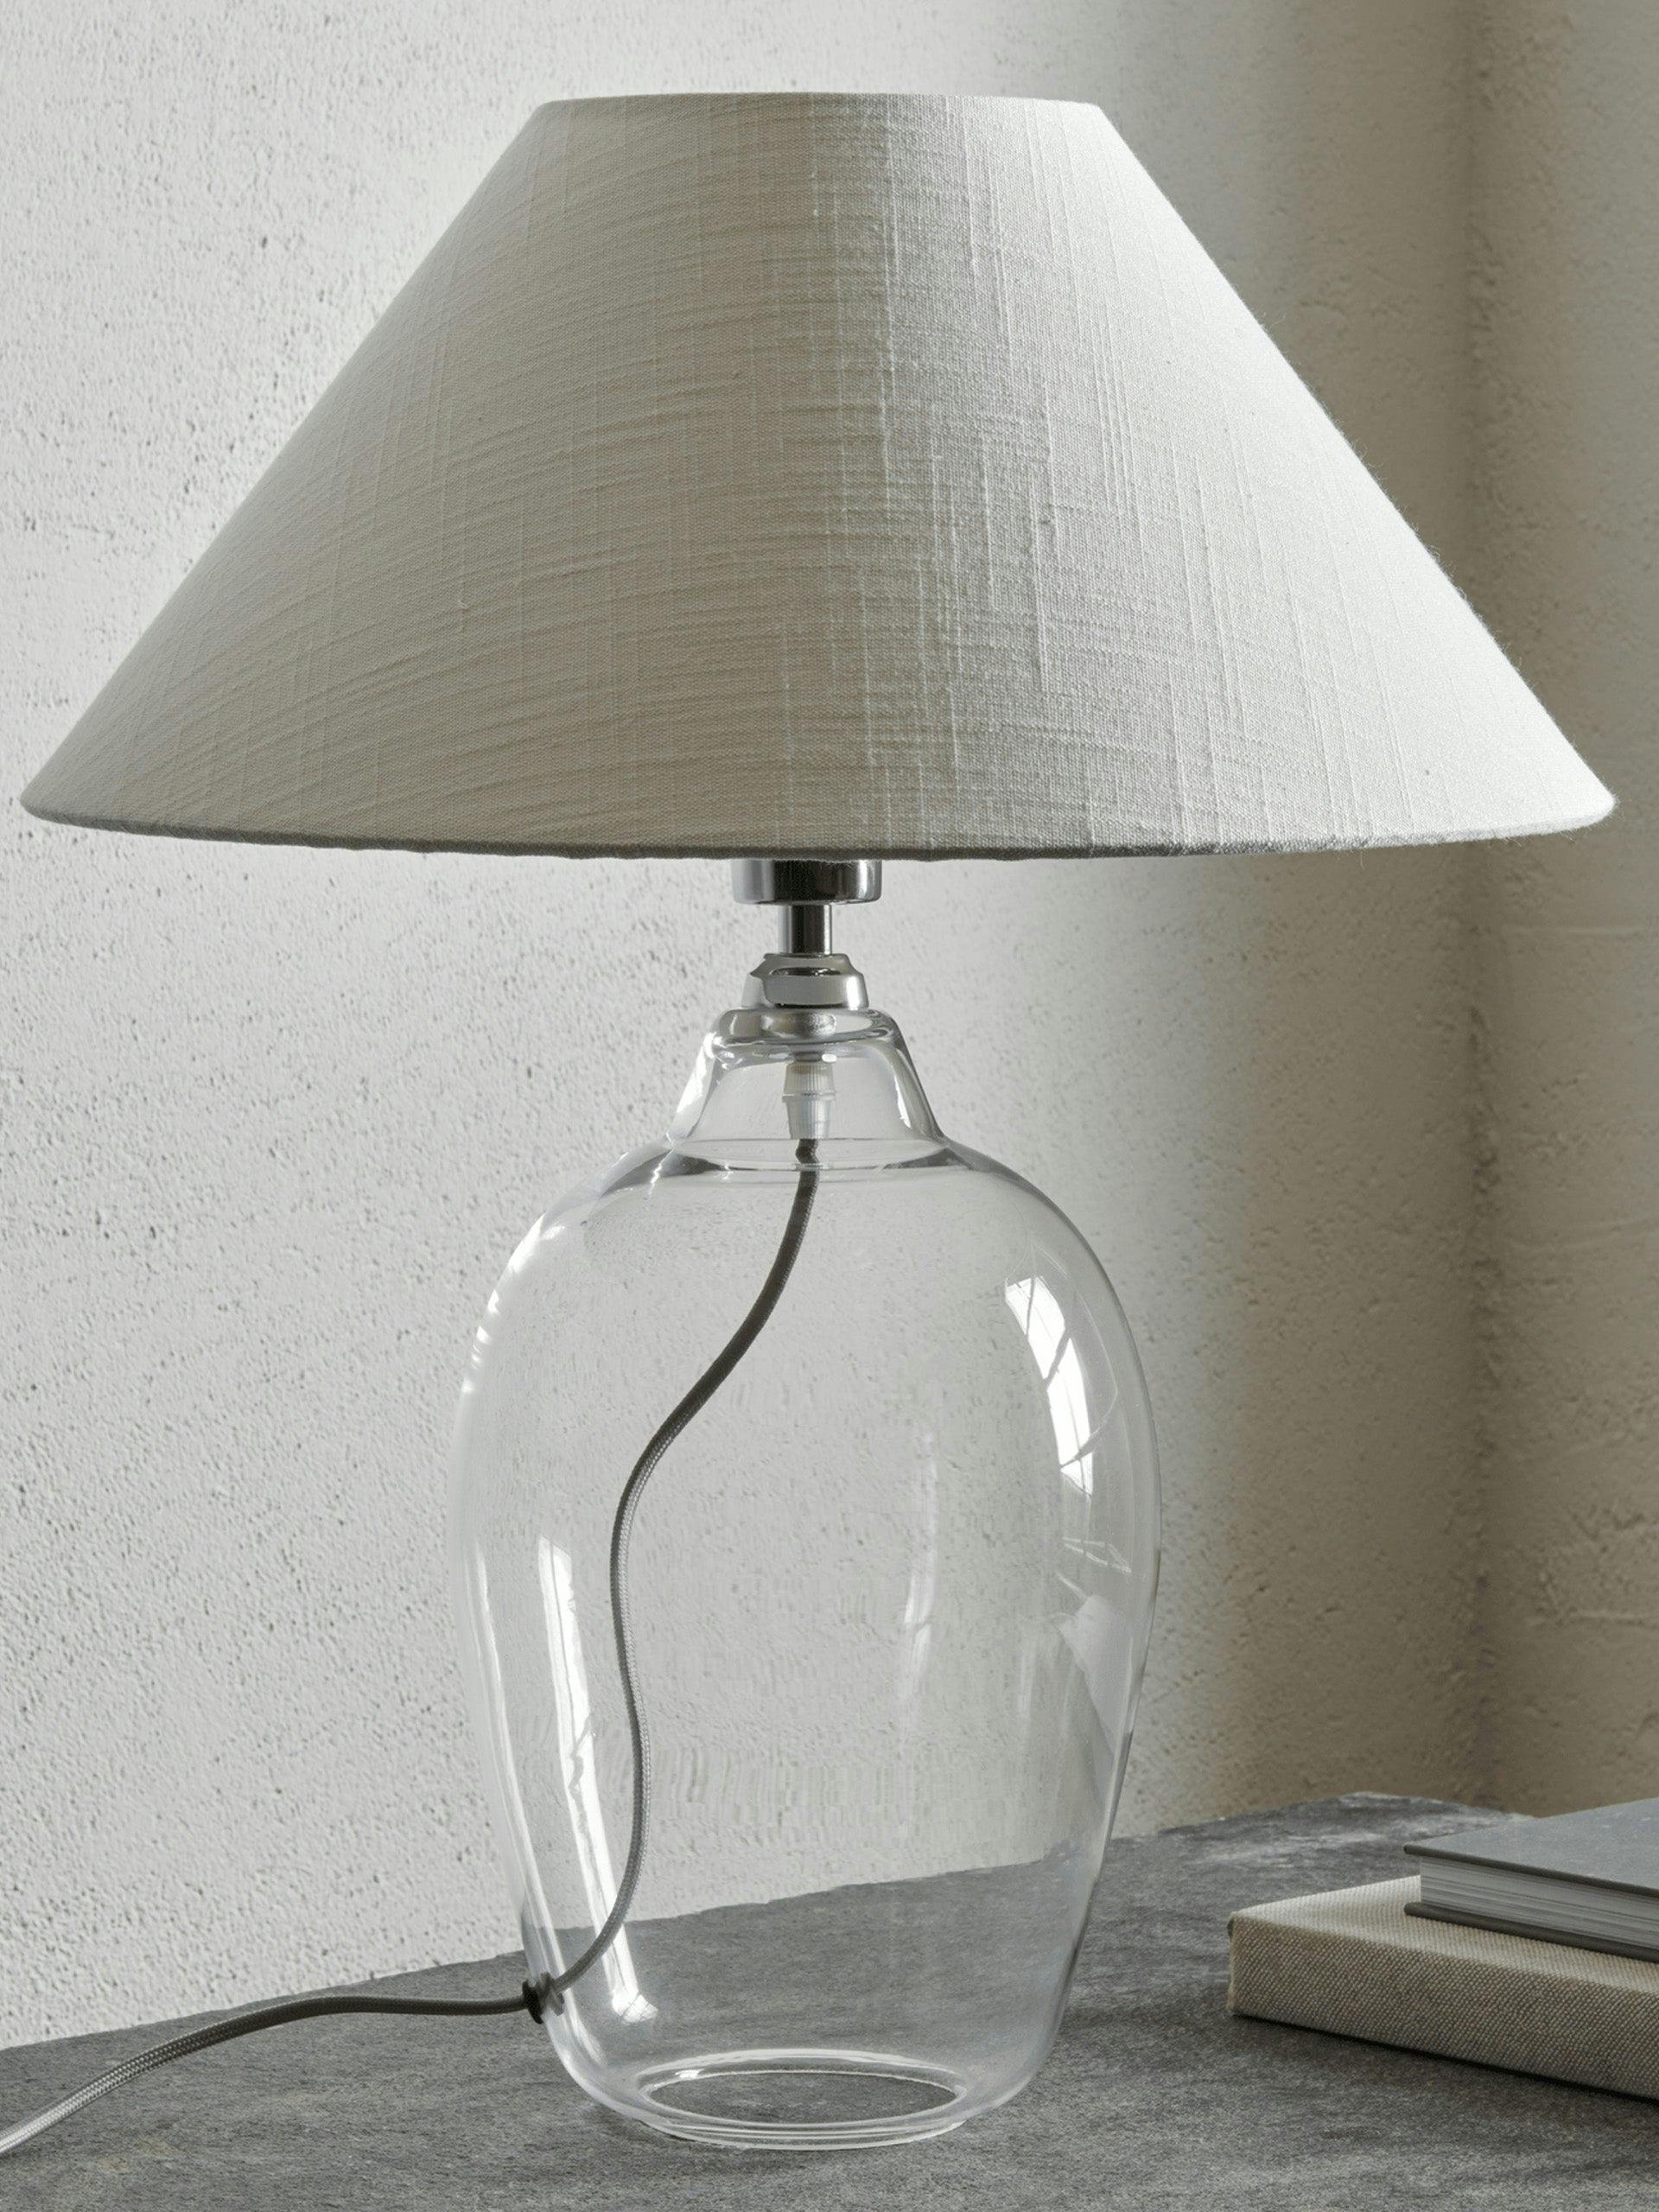 Shaftesbury glass lamp